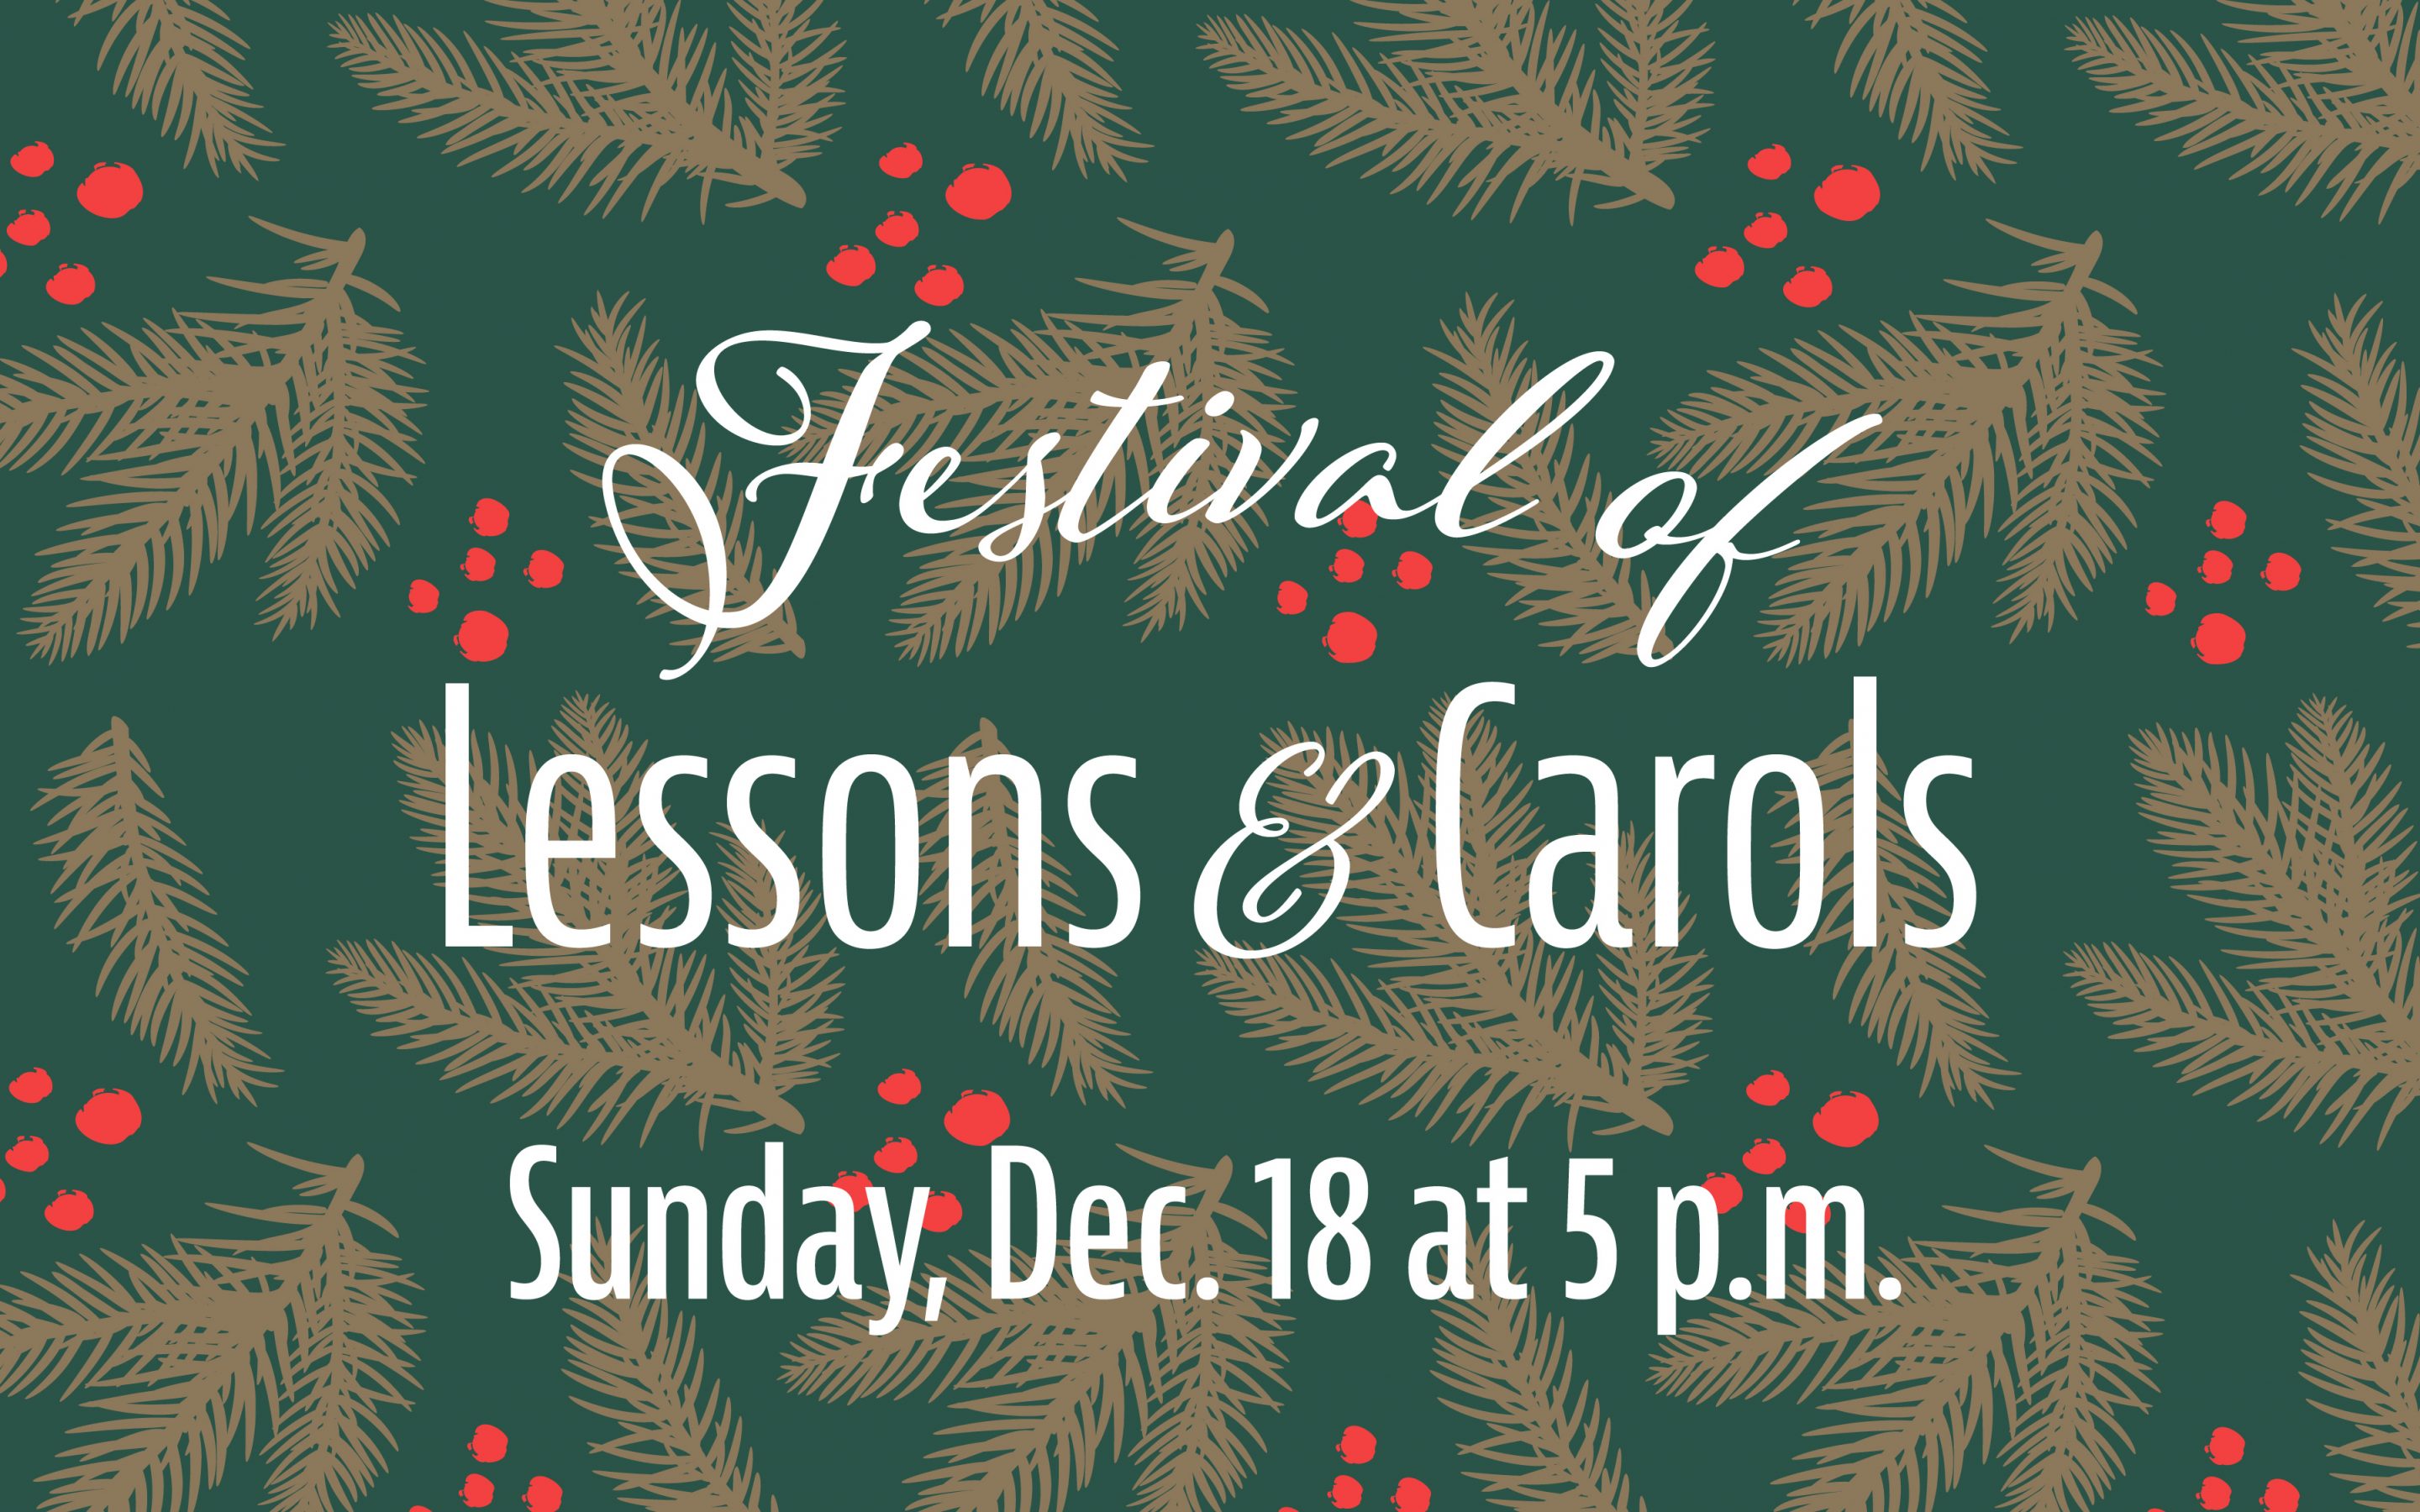 Festival of Lessons & Carols Dec. 18 at 5 p.m.